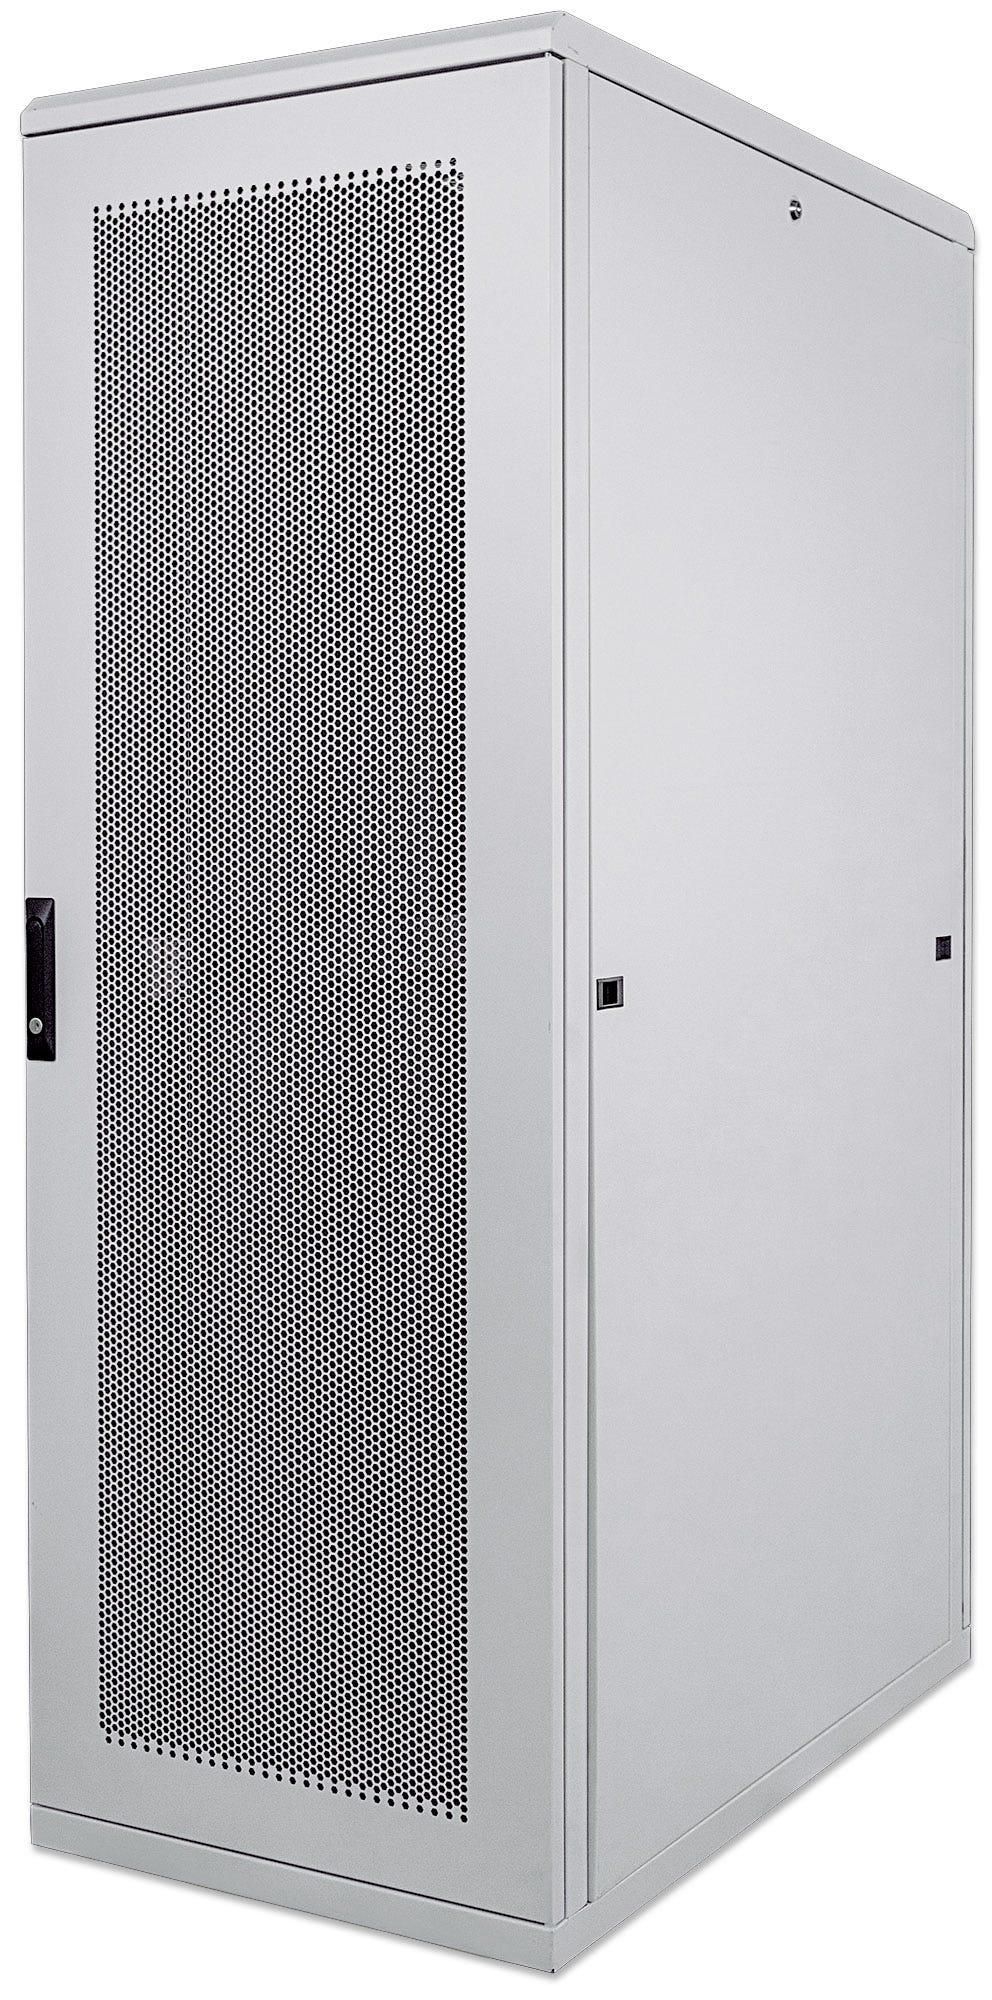 Intellinet 713207 19 Server Cabinet 